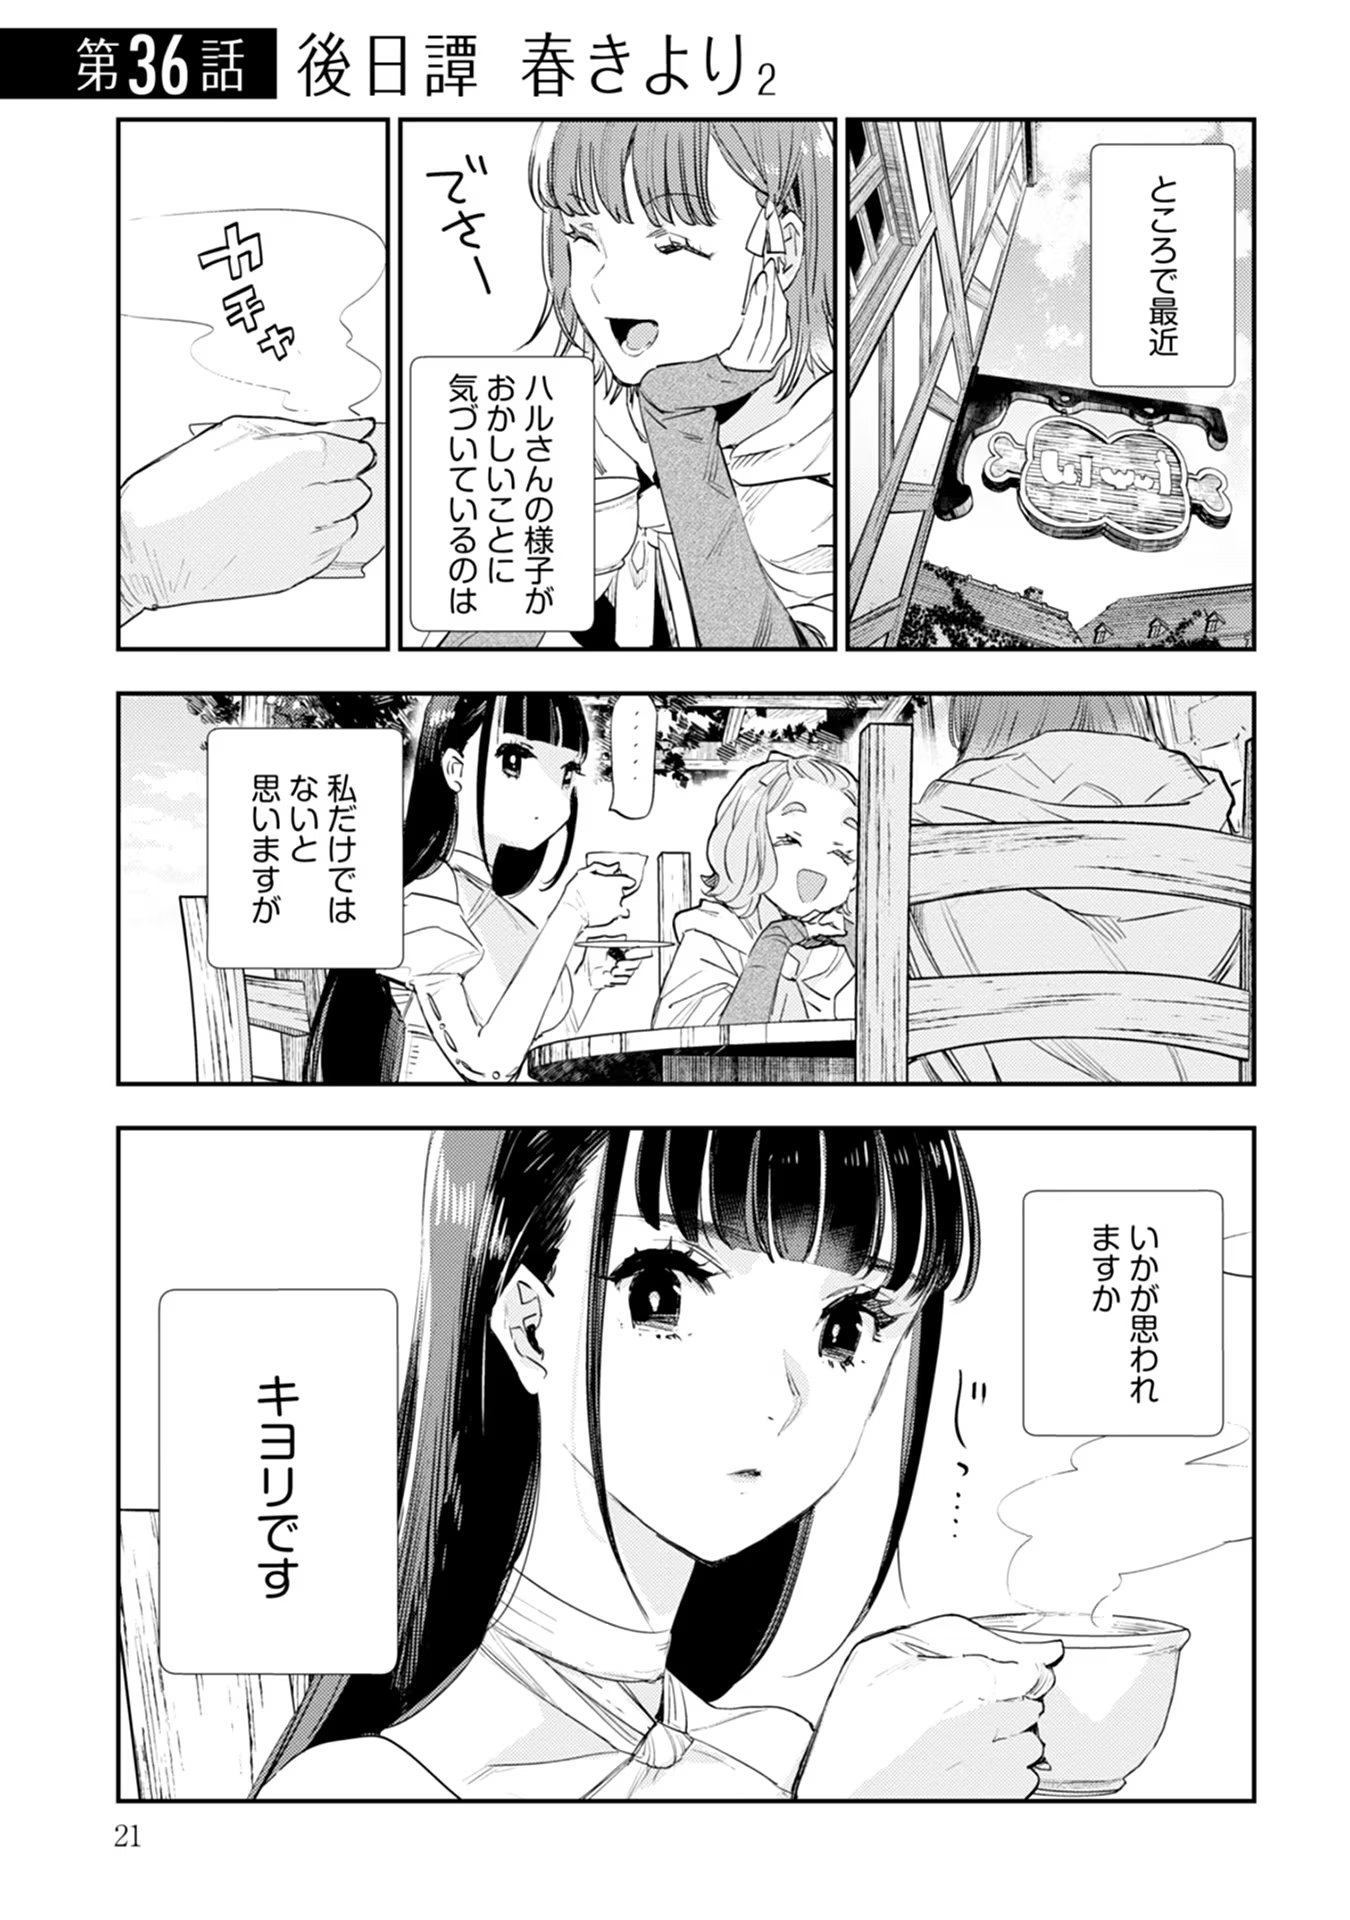 JK Haru Wa Isekai De Shoufu Ni Natta - Chapter 36 - Page 1